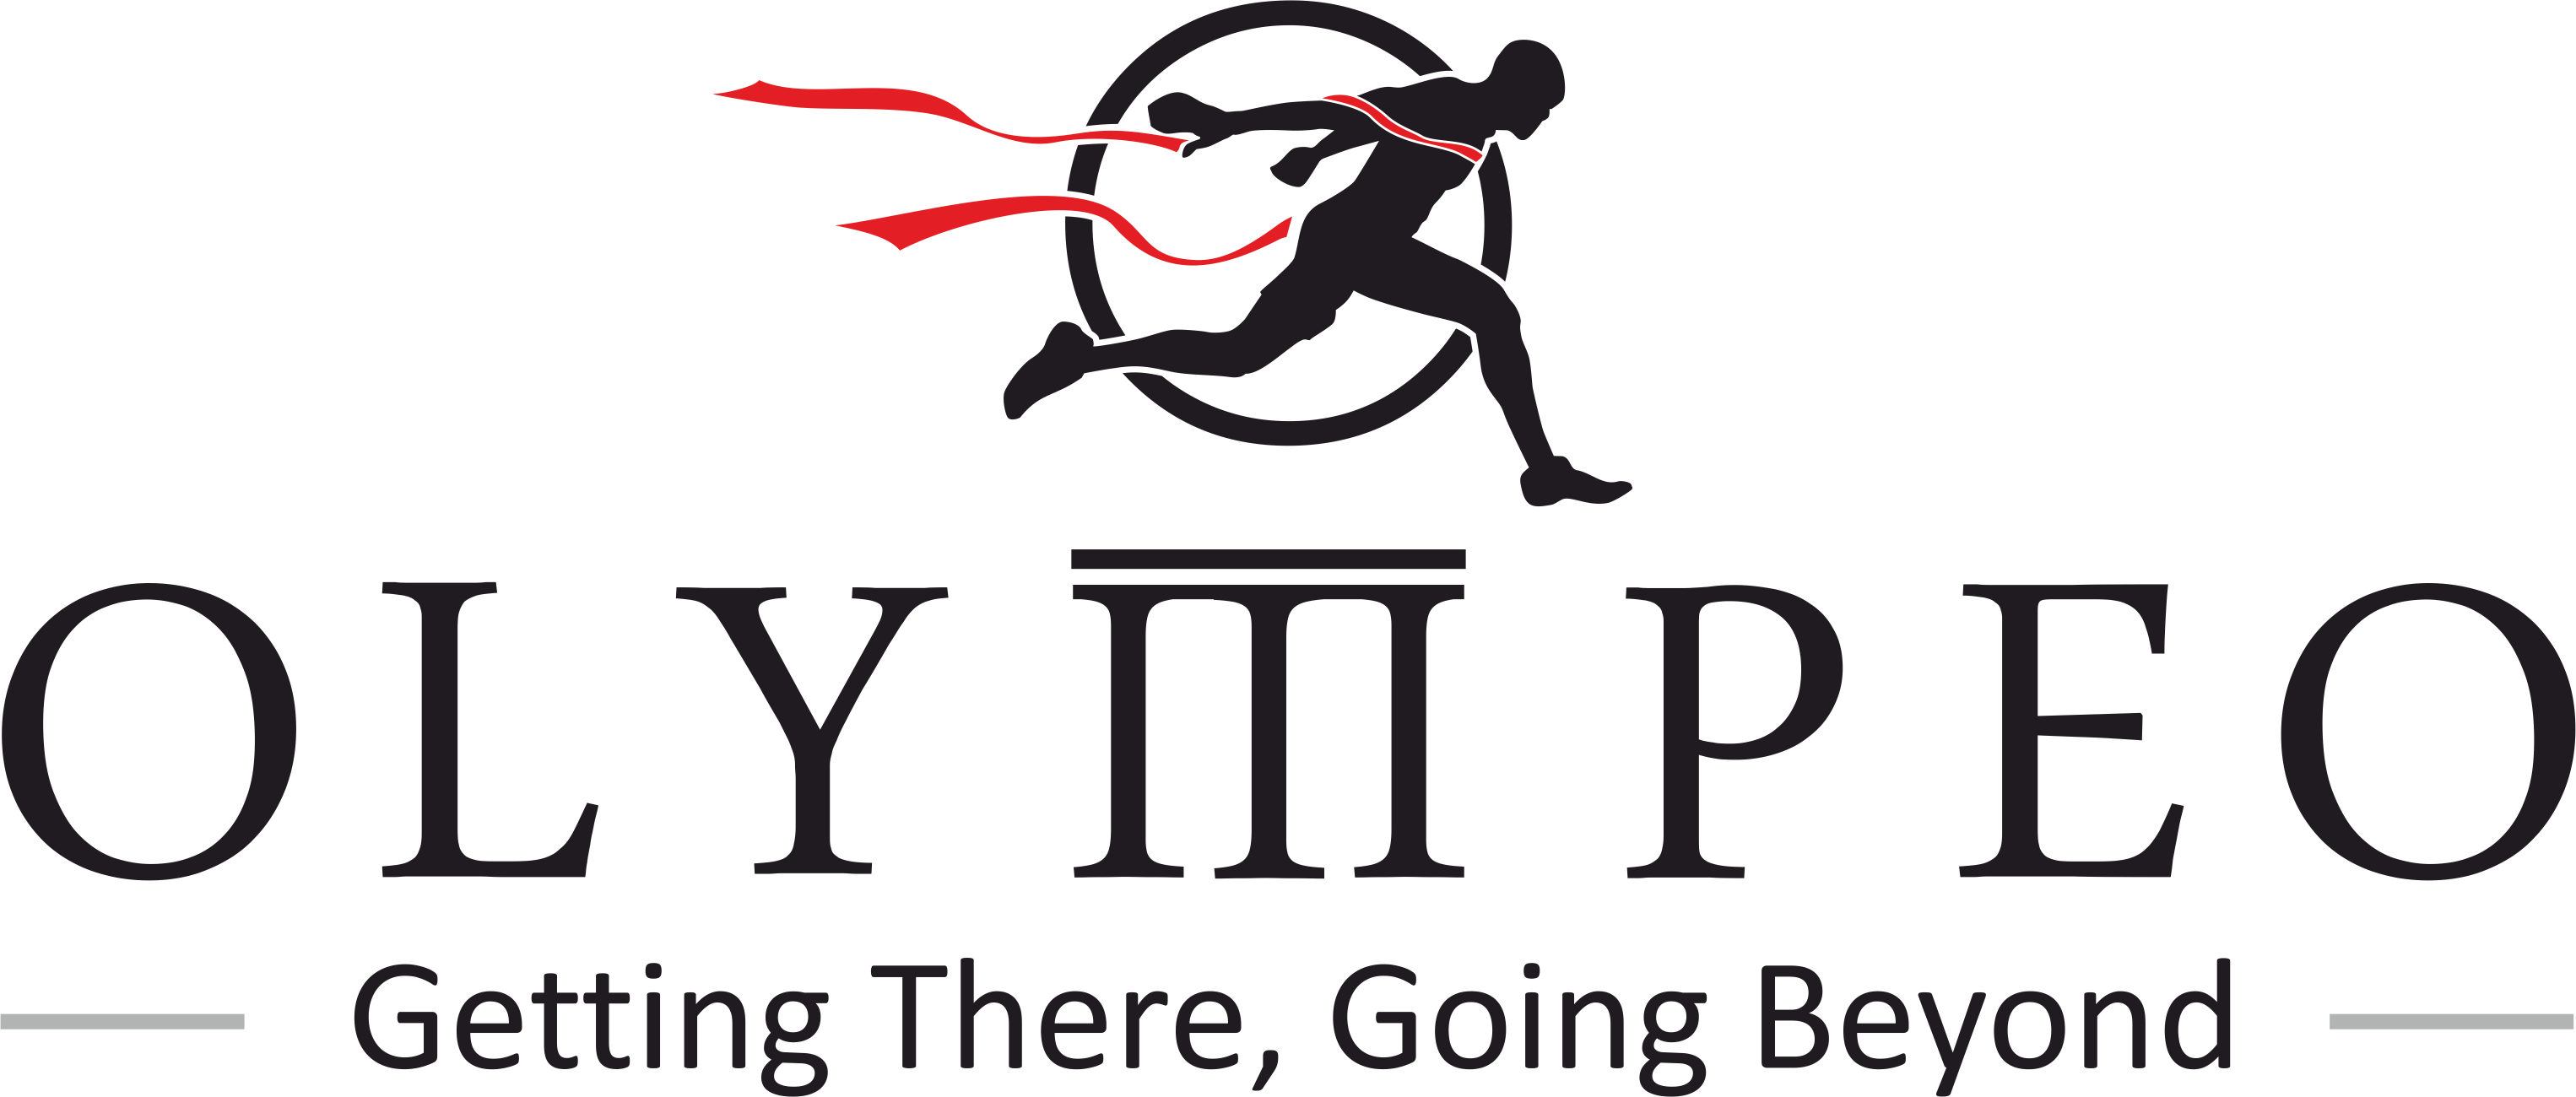 Olympeo Logo